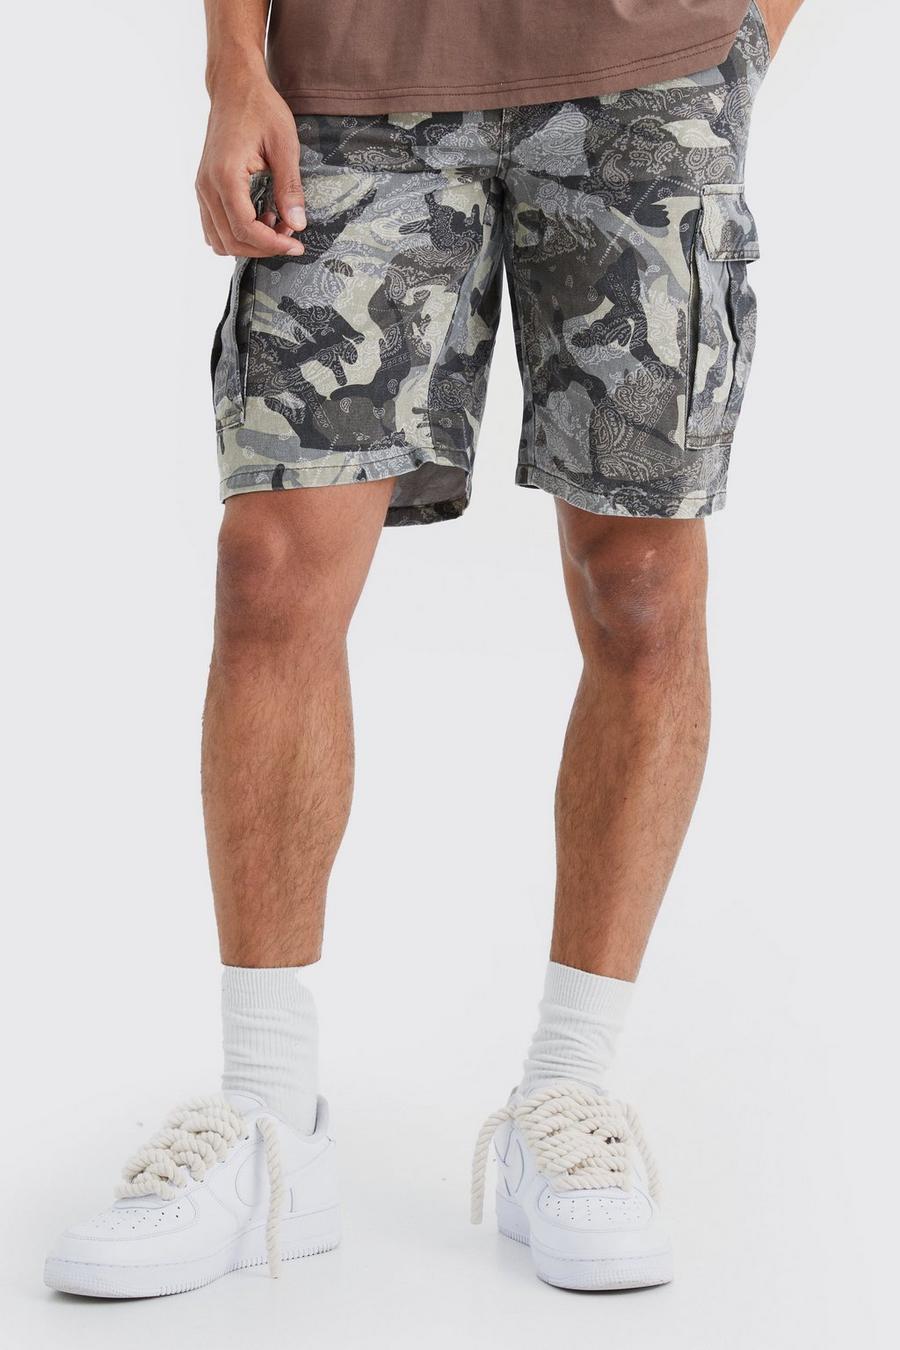 Lockere Camouflage Cargo-Shorts mit Bandana-Print, Light grey grau